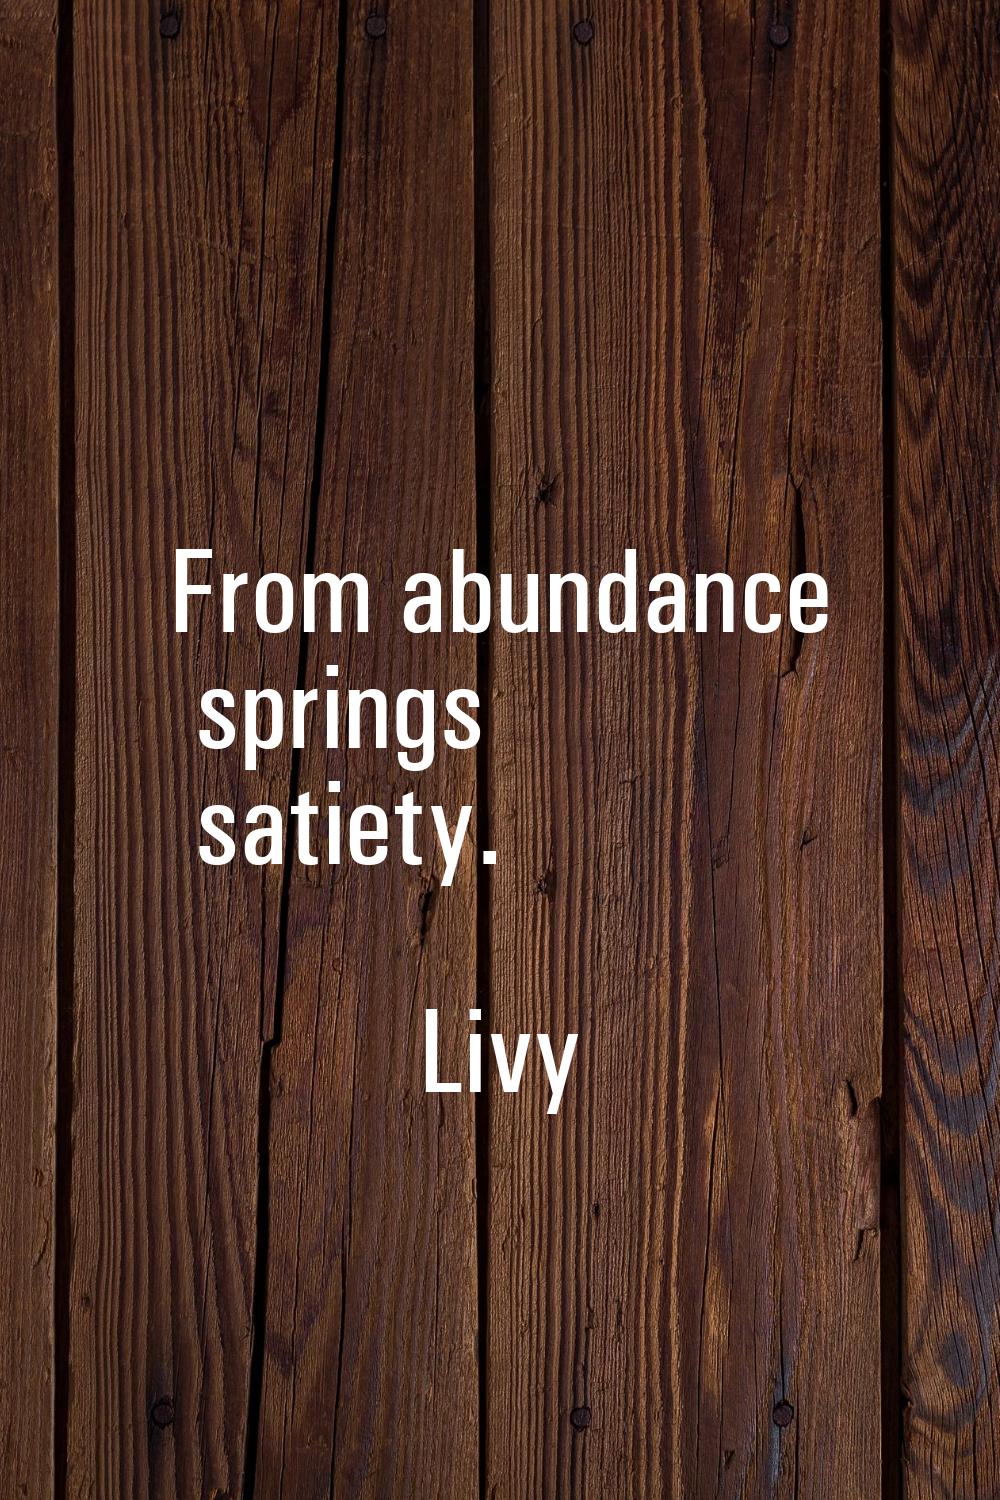 From abundance springs satiety.